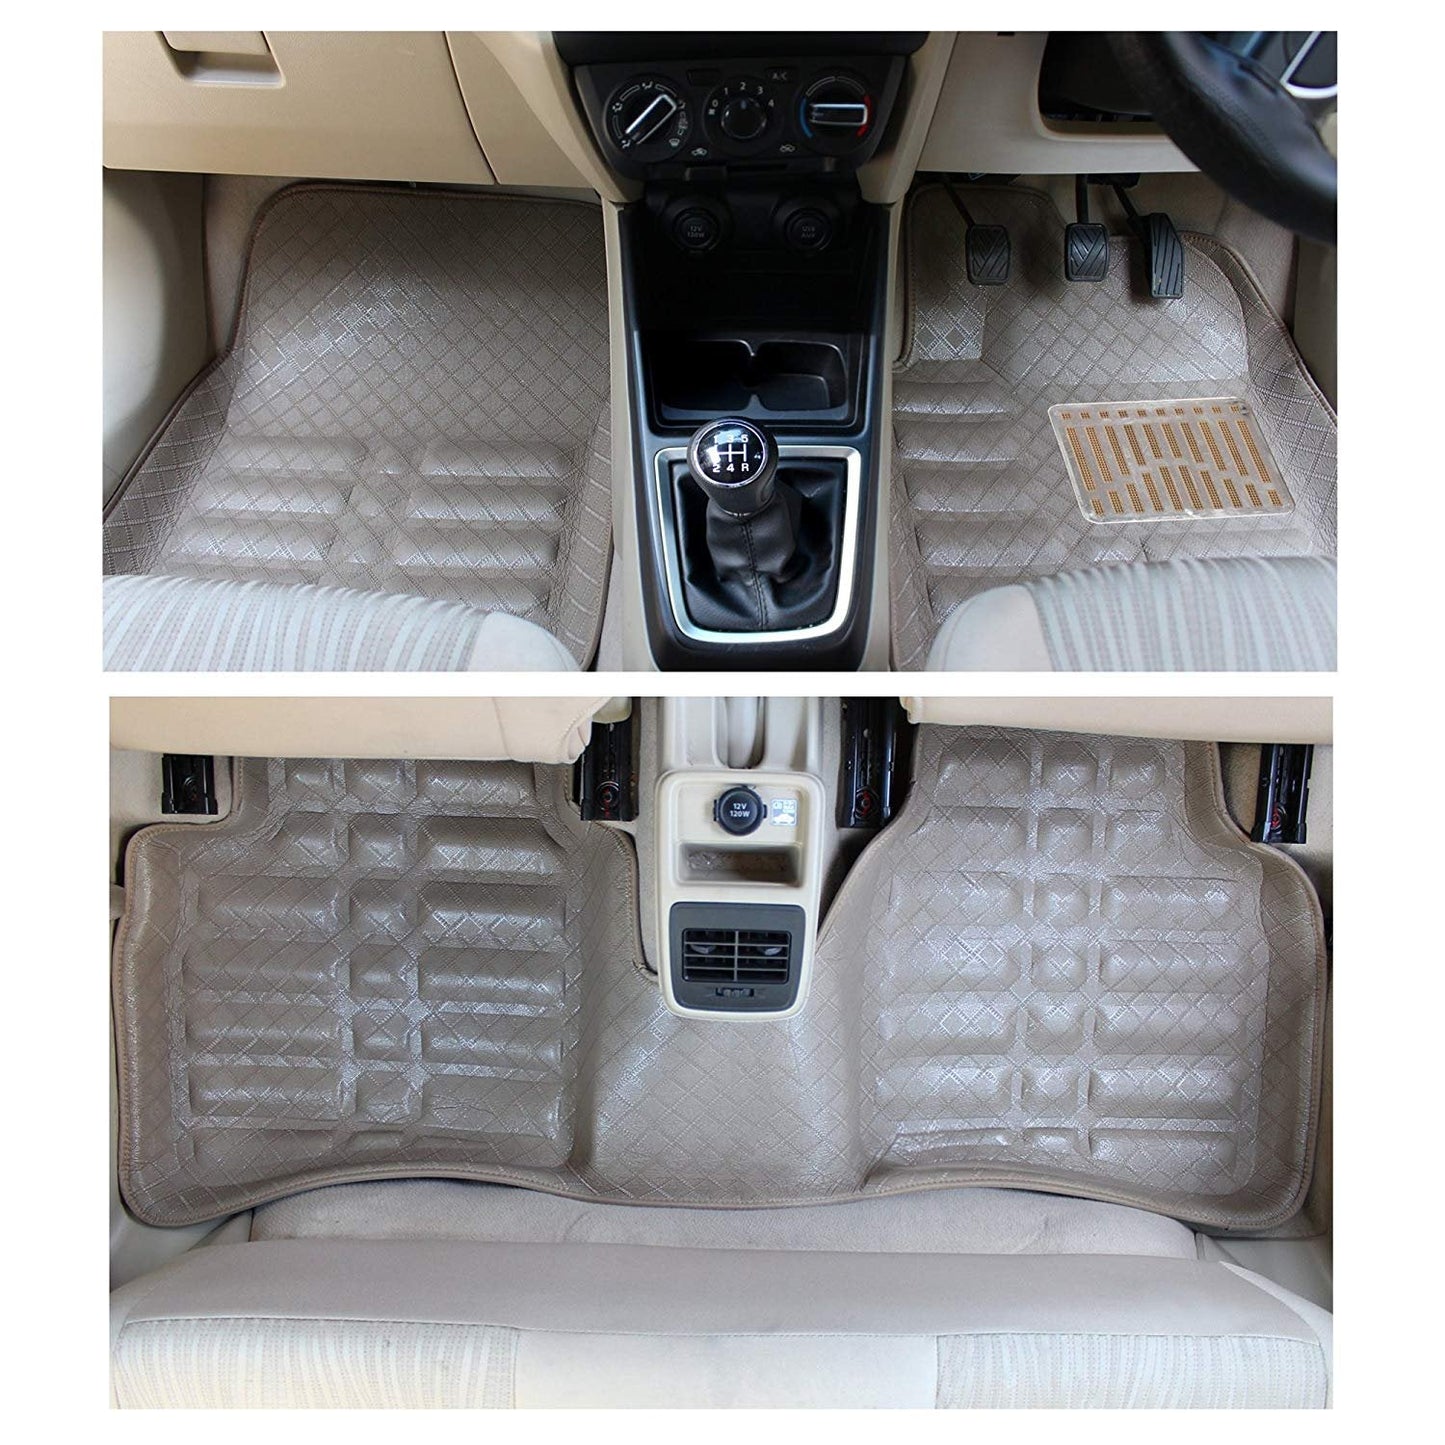 Oshotto 4D Artificial Leather Car Floor Mats For Maruti Suzuki Ciaz (Set of 3) - Beige